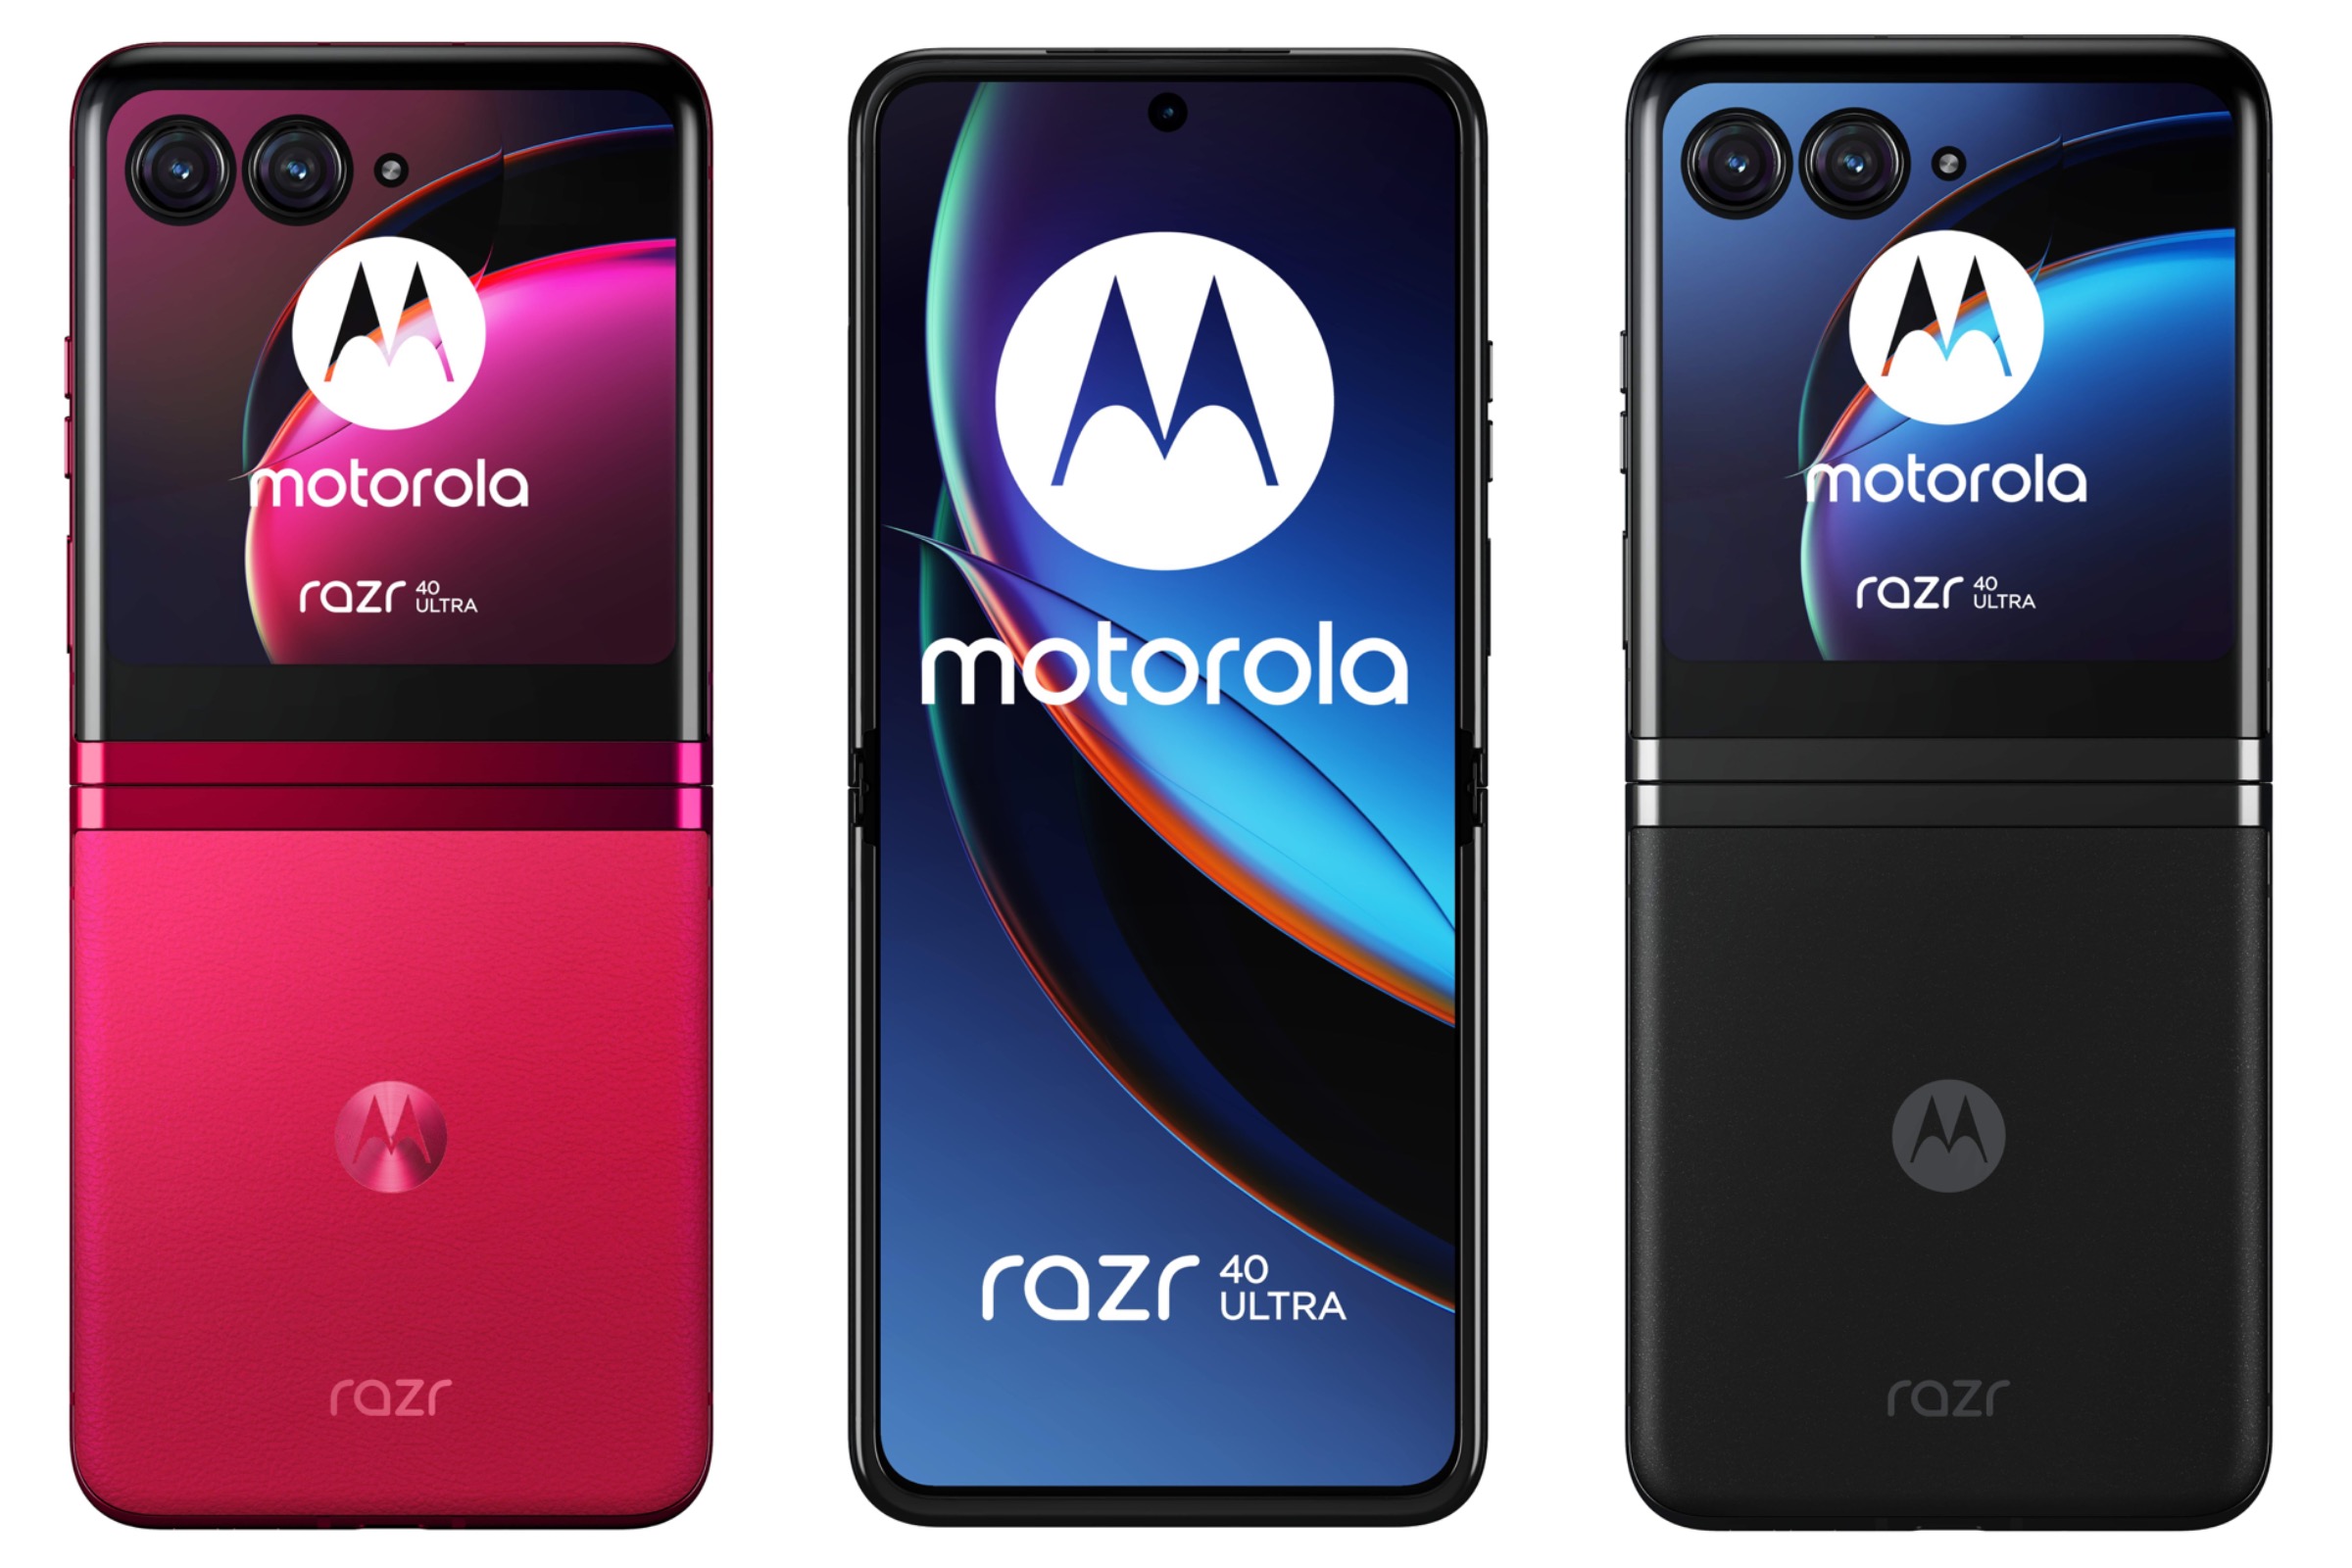 Motorola Razr 40 Ultra review: Design and build